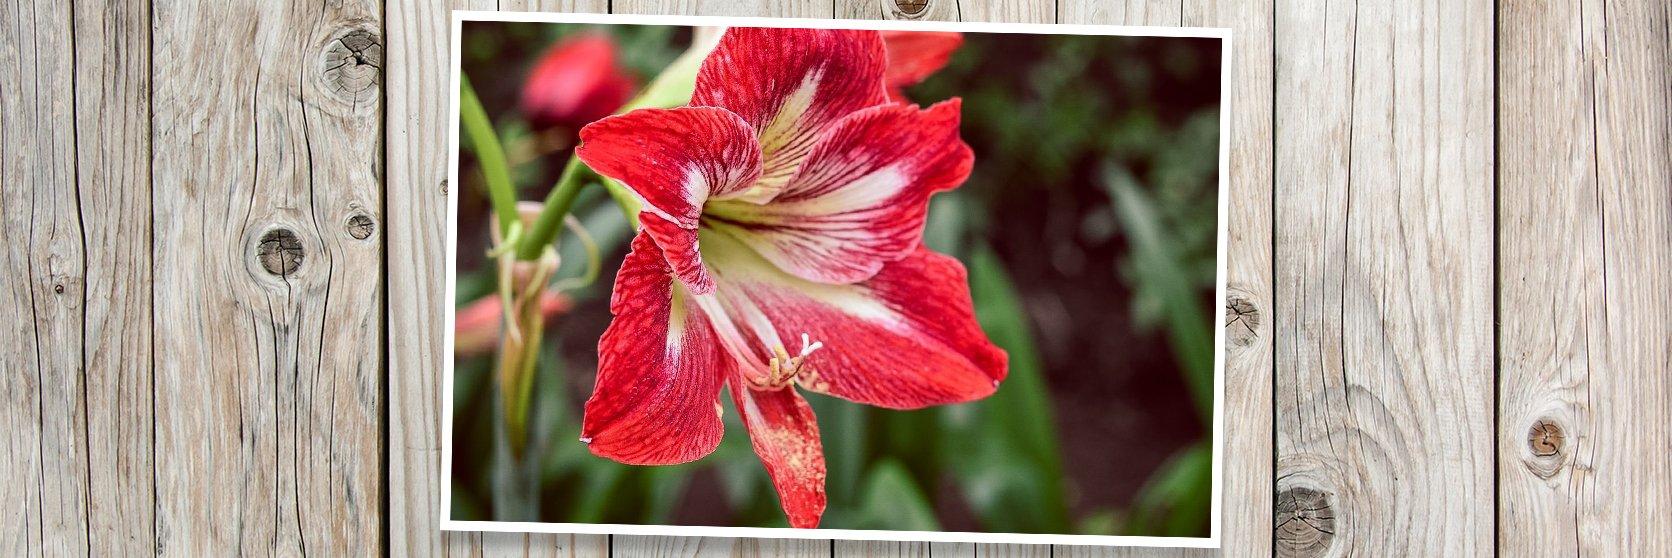 Amaryllis-red-white-flower